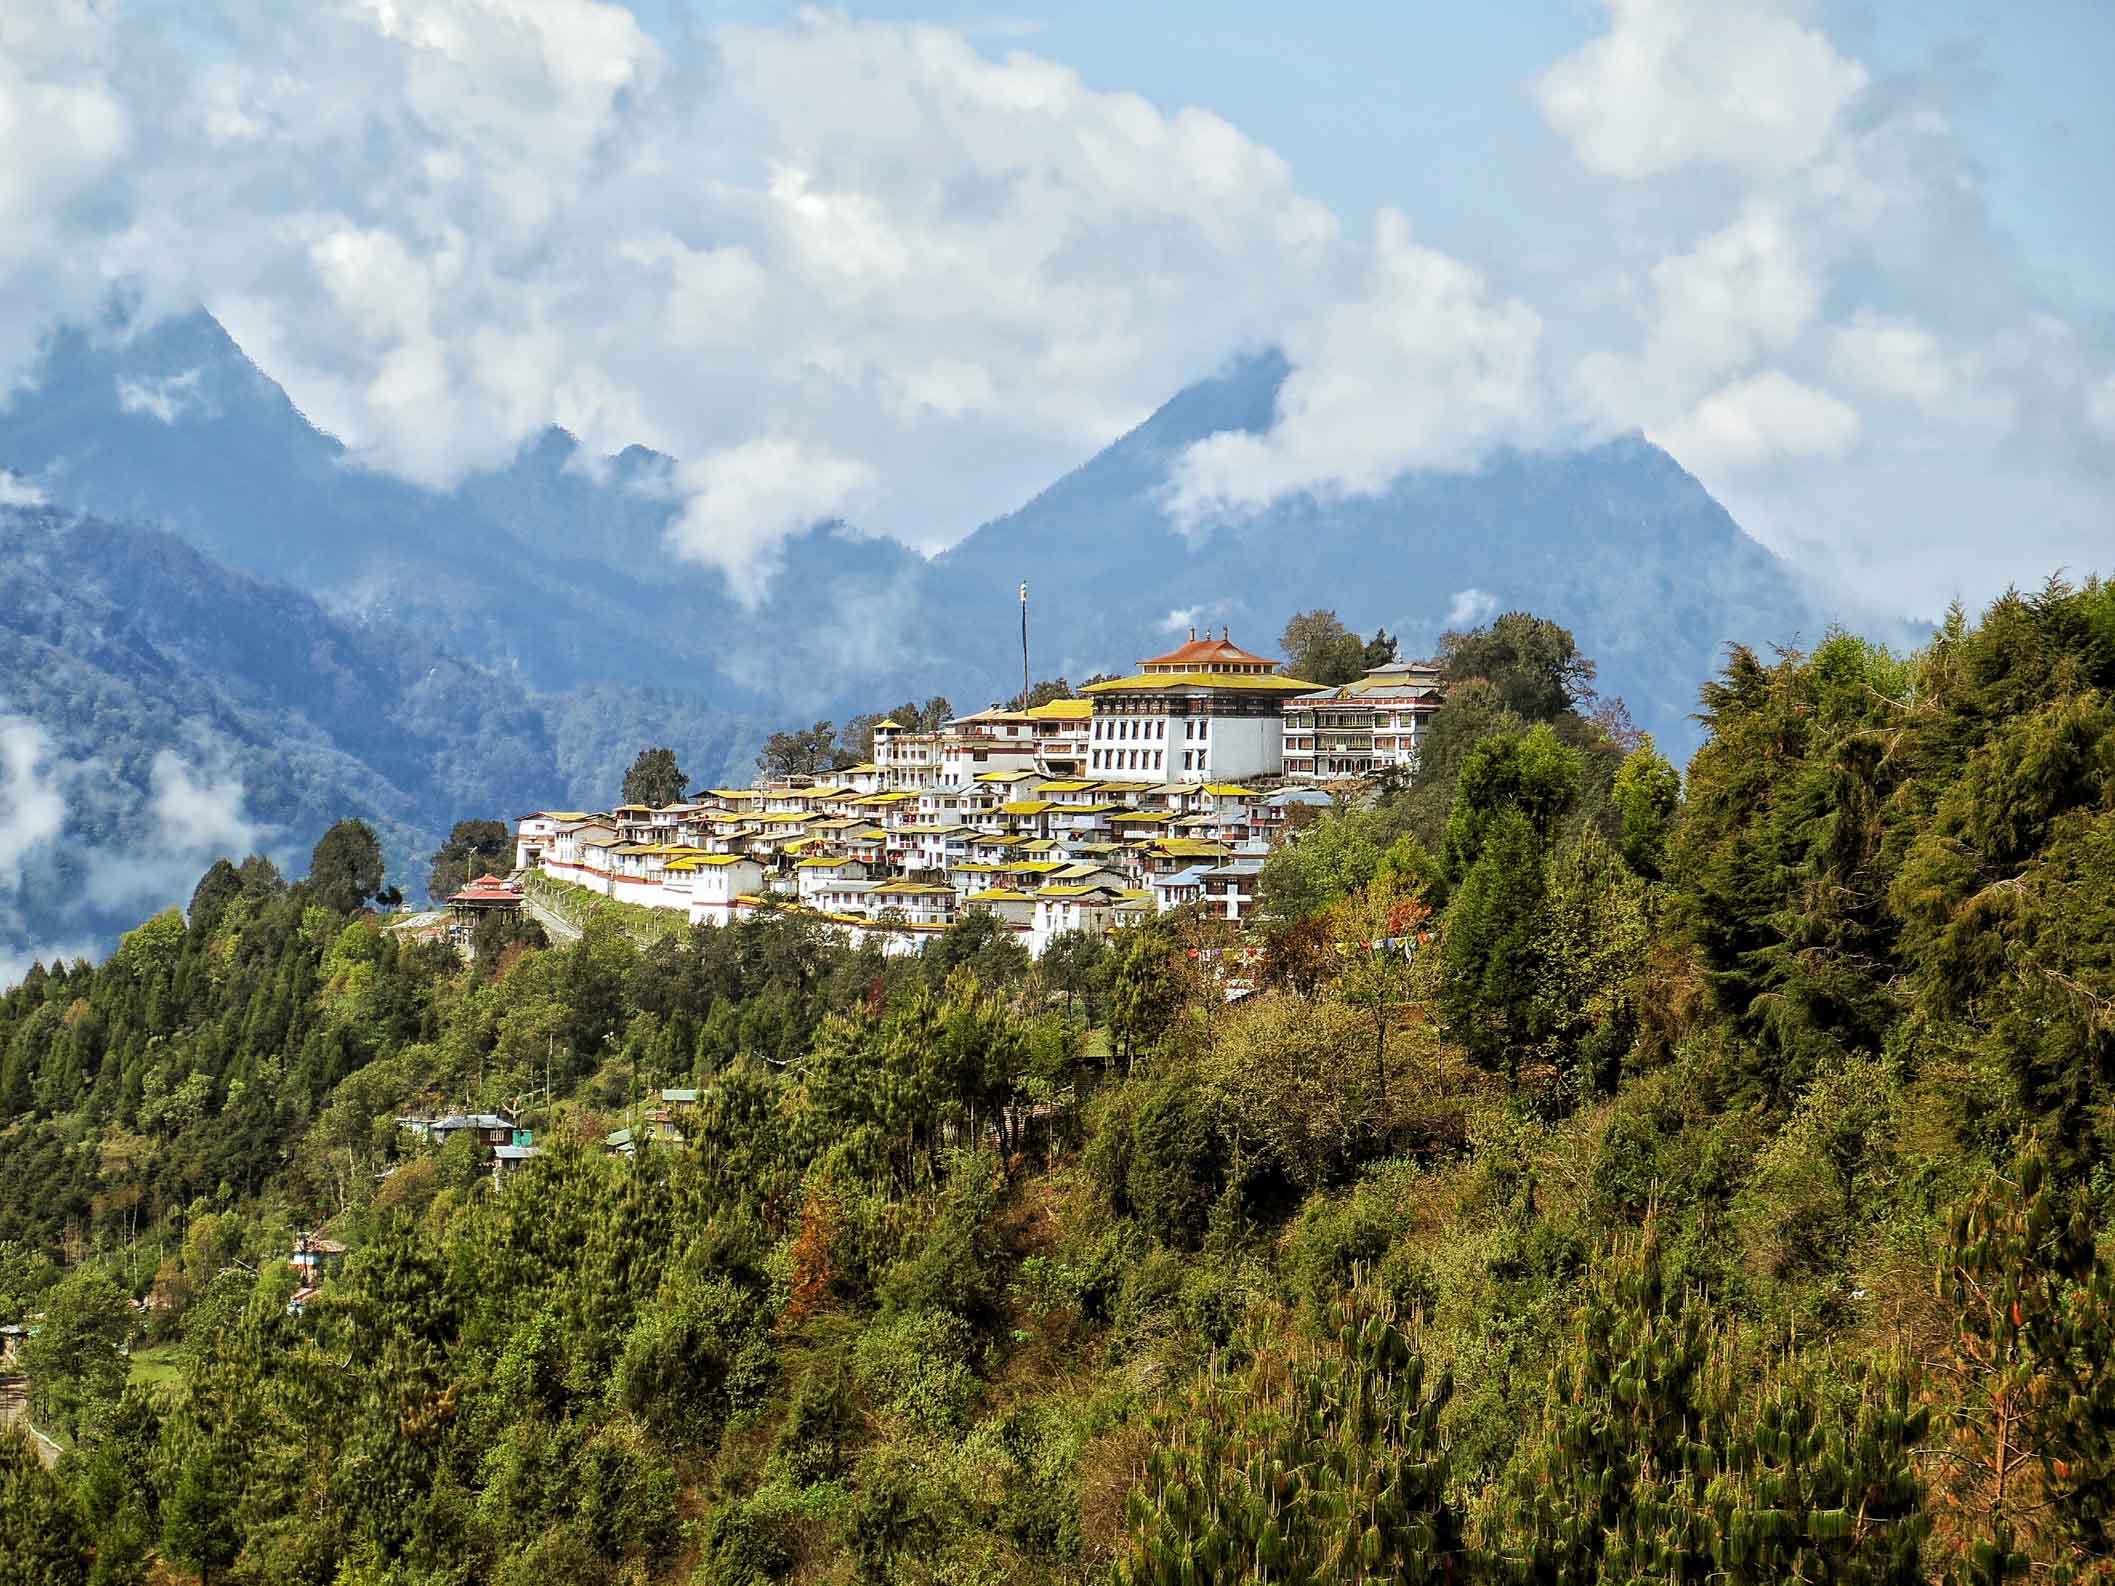 Tawang Monastery in north east india